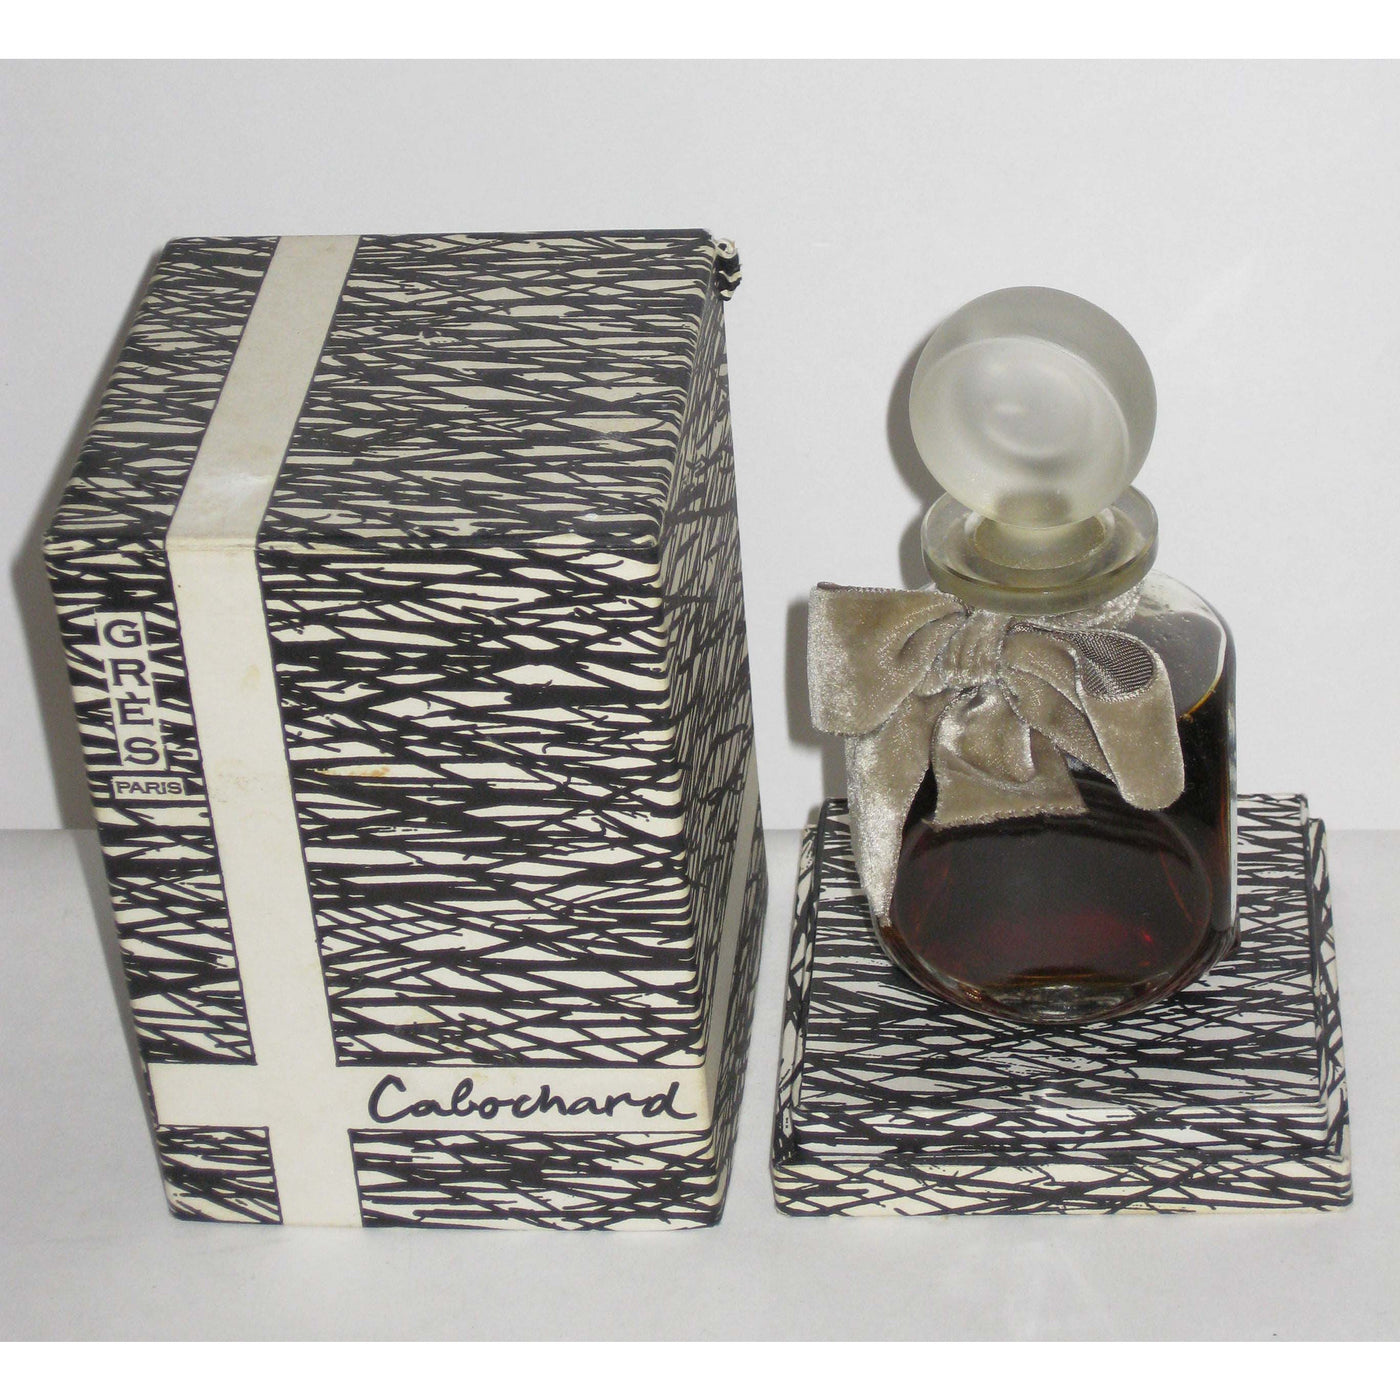 Vintage Gres Cabochard Perfume